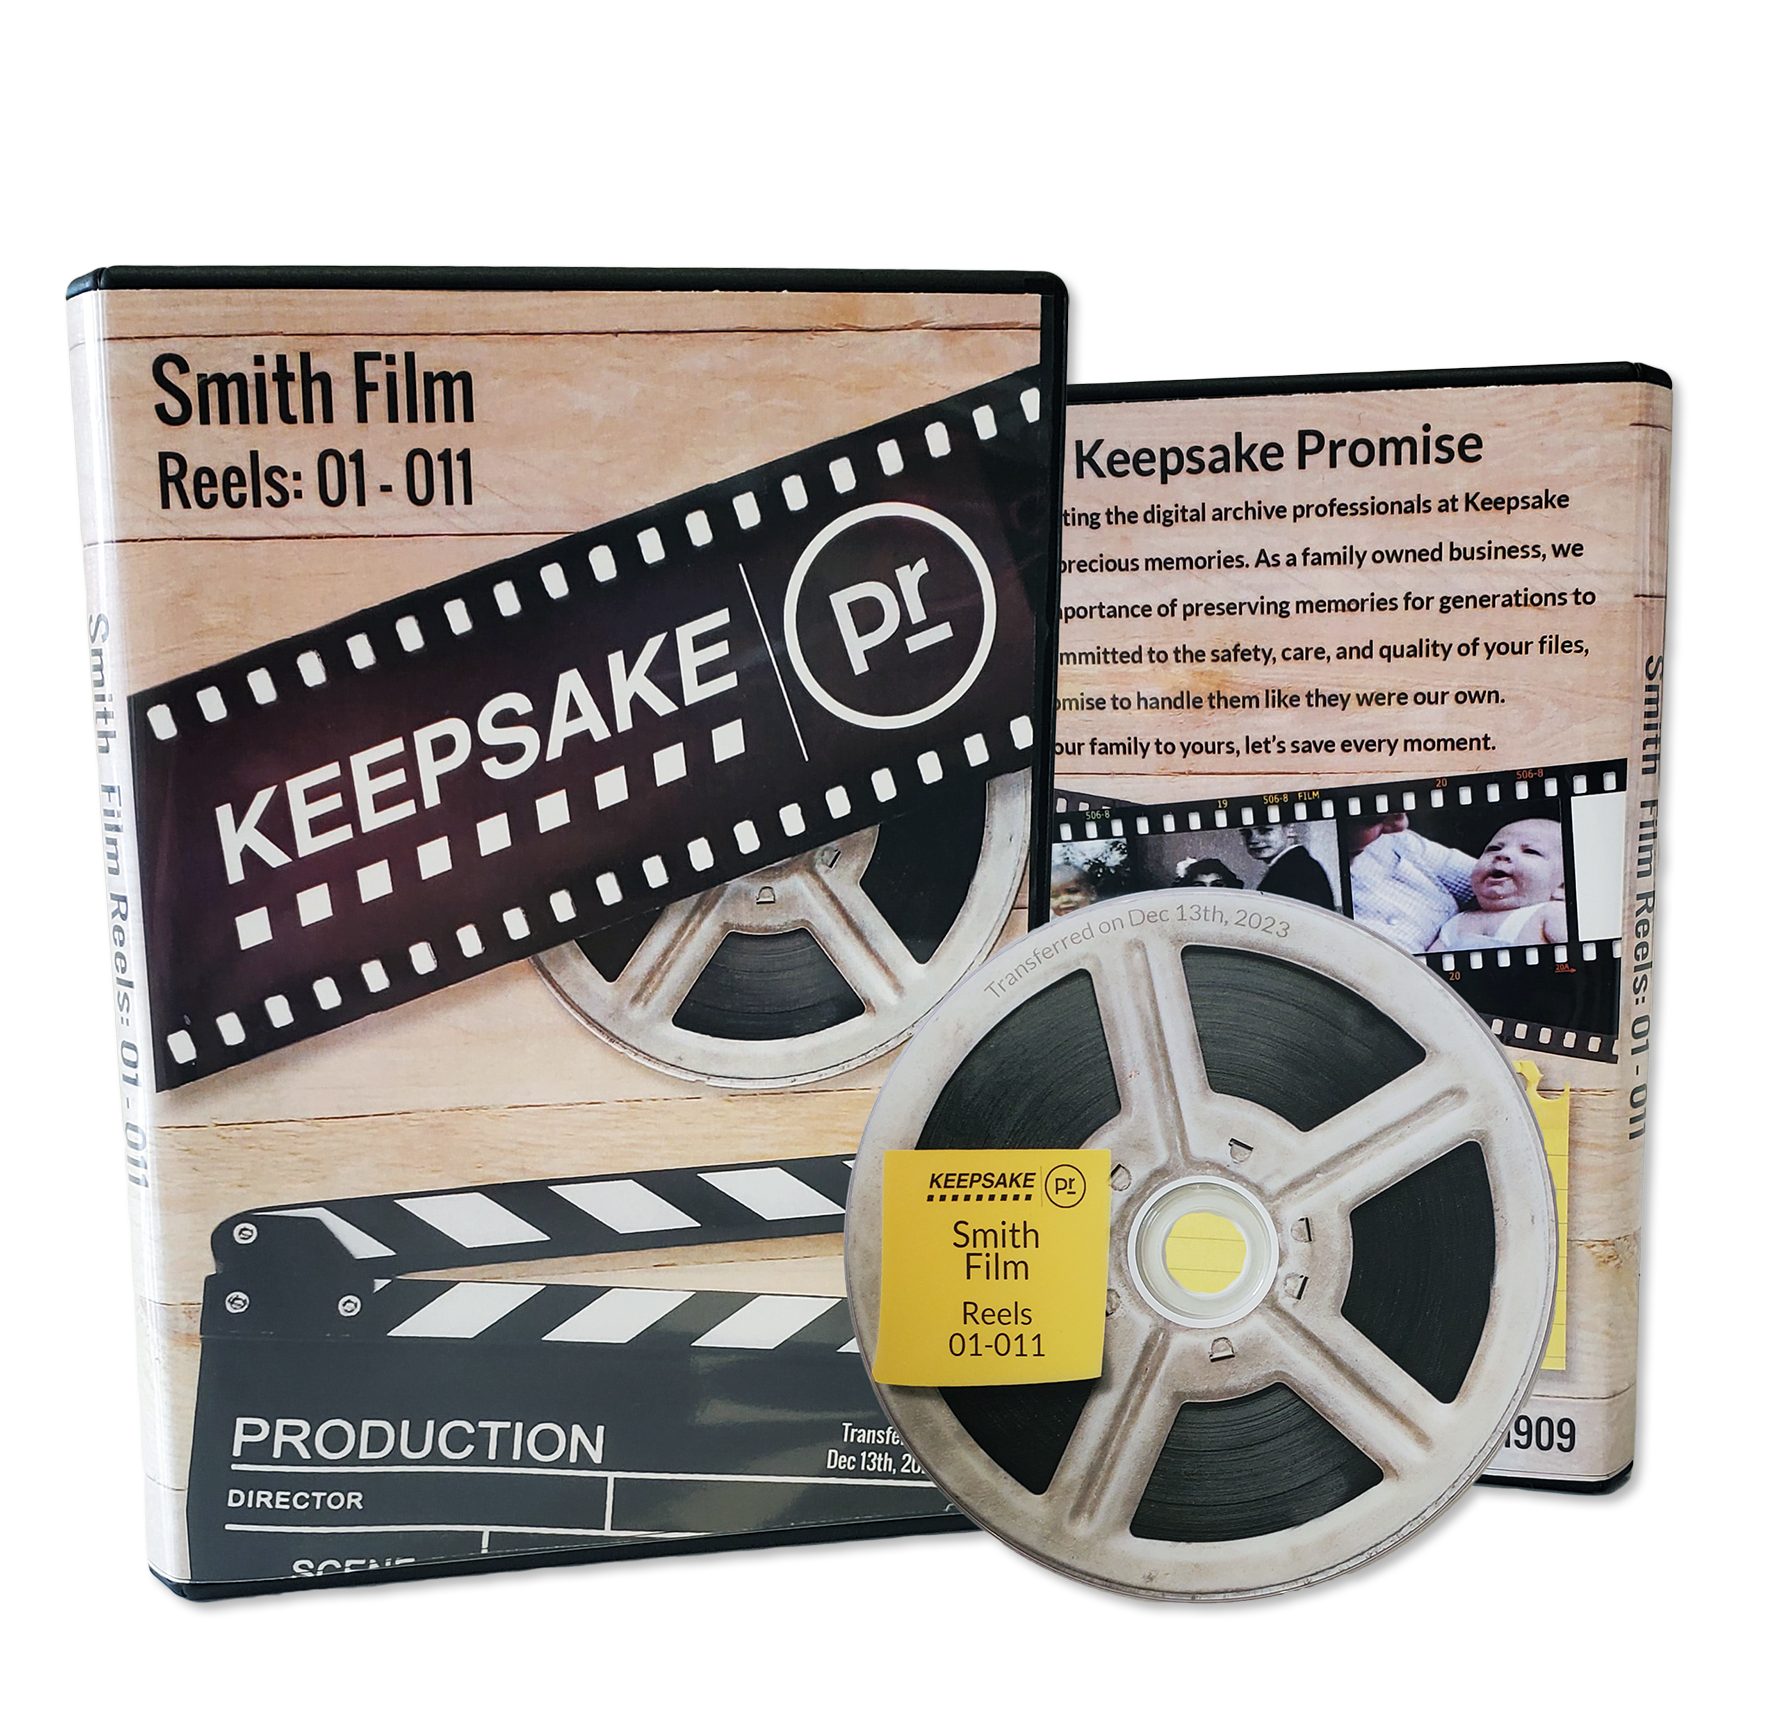 Film DVD